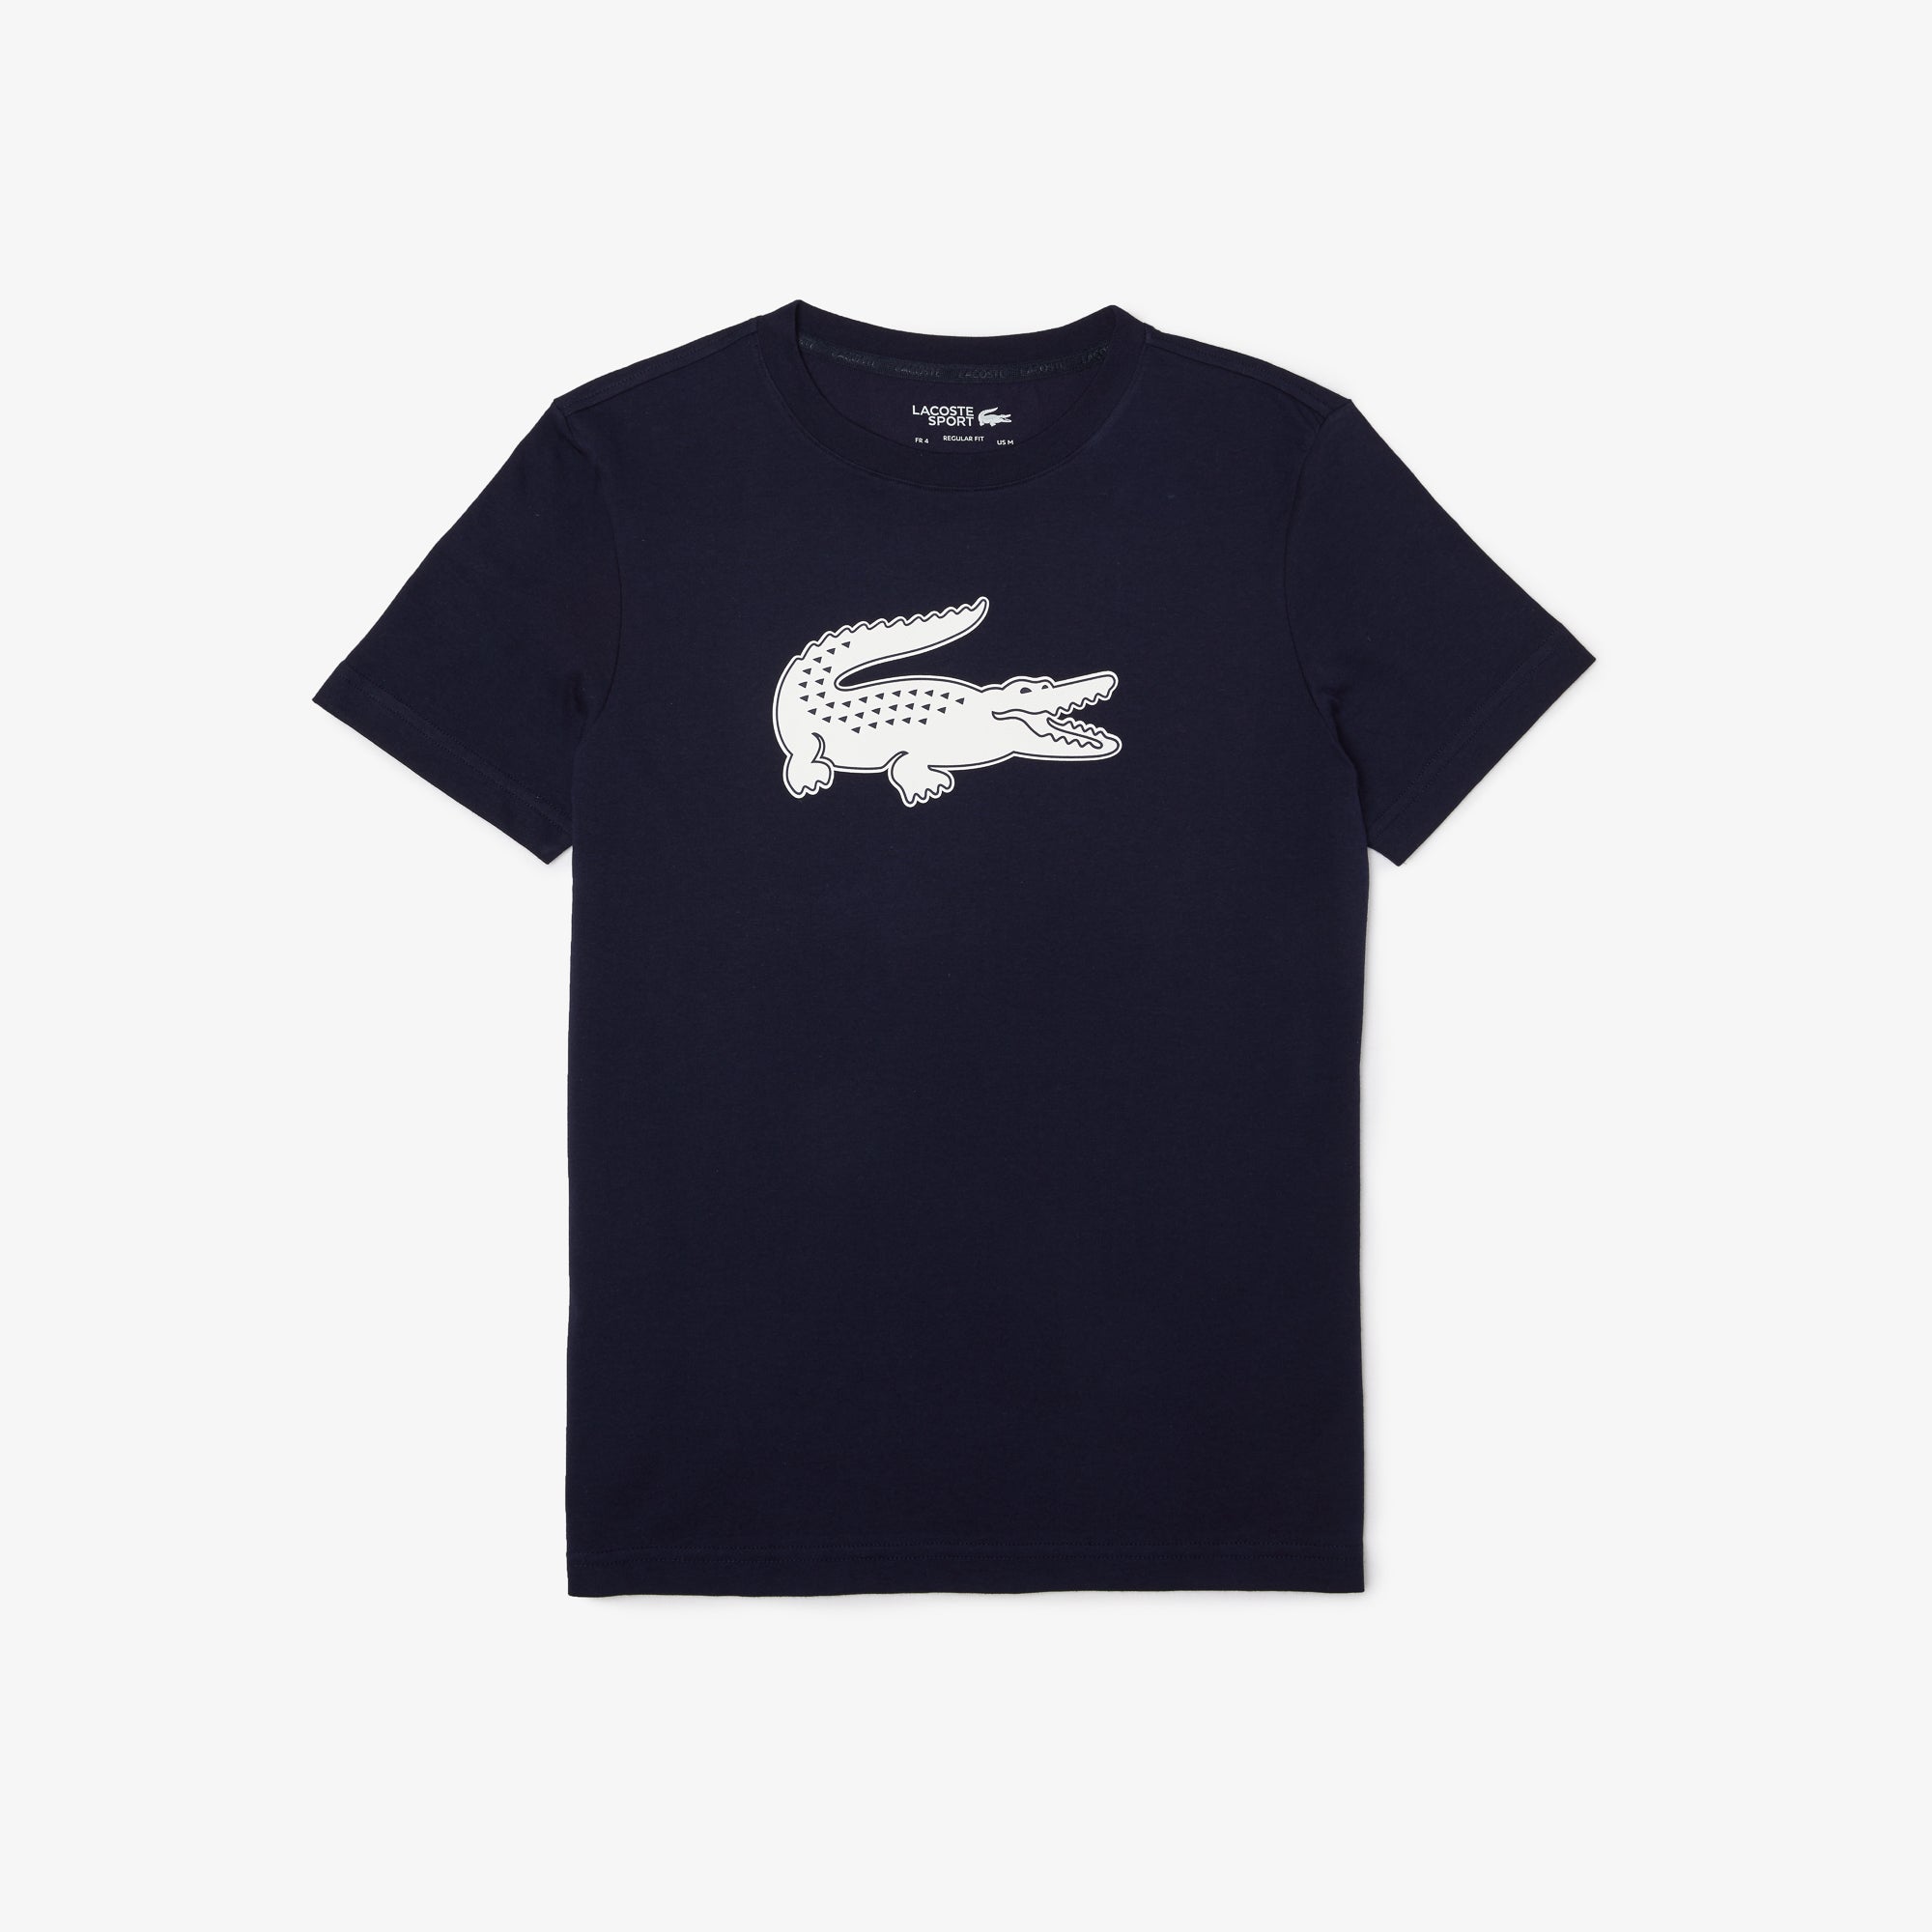 Lacoste T-shirt (Navy Blue/White) - XL